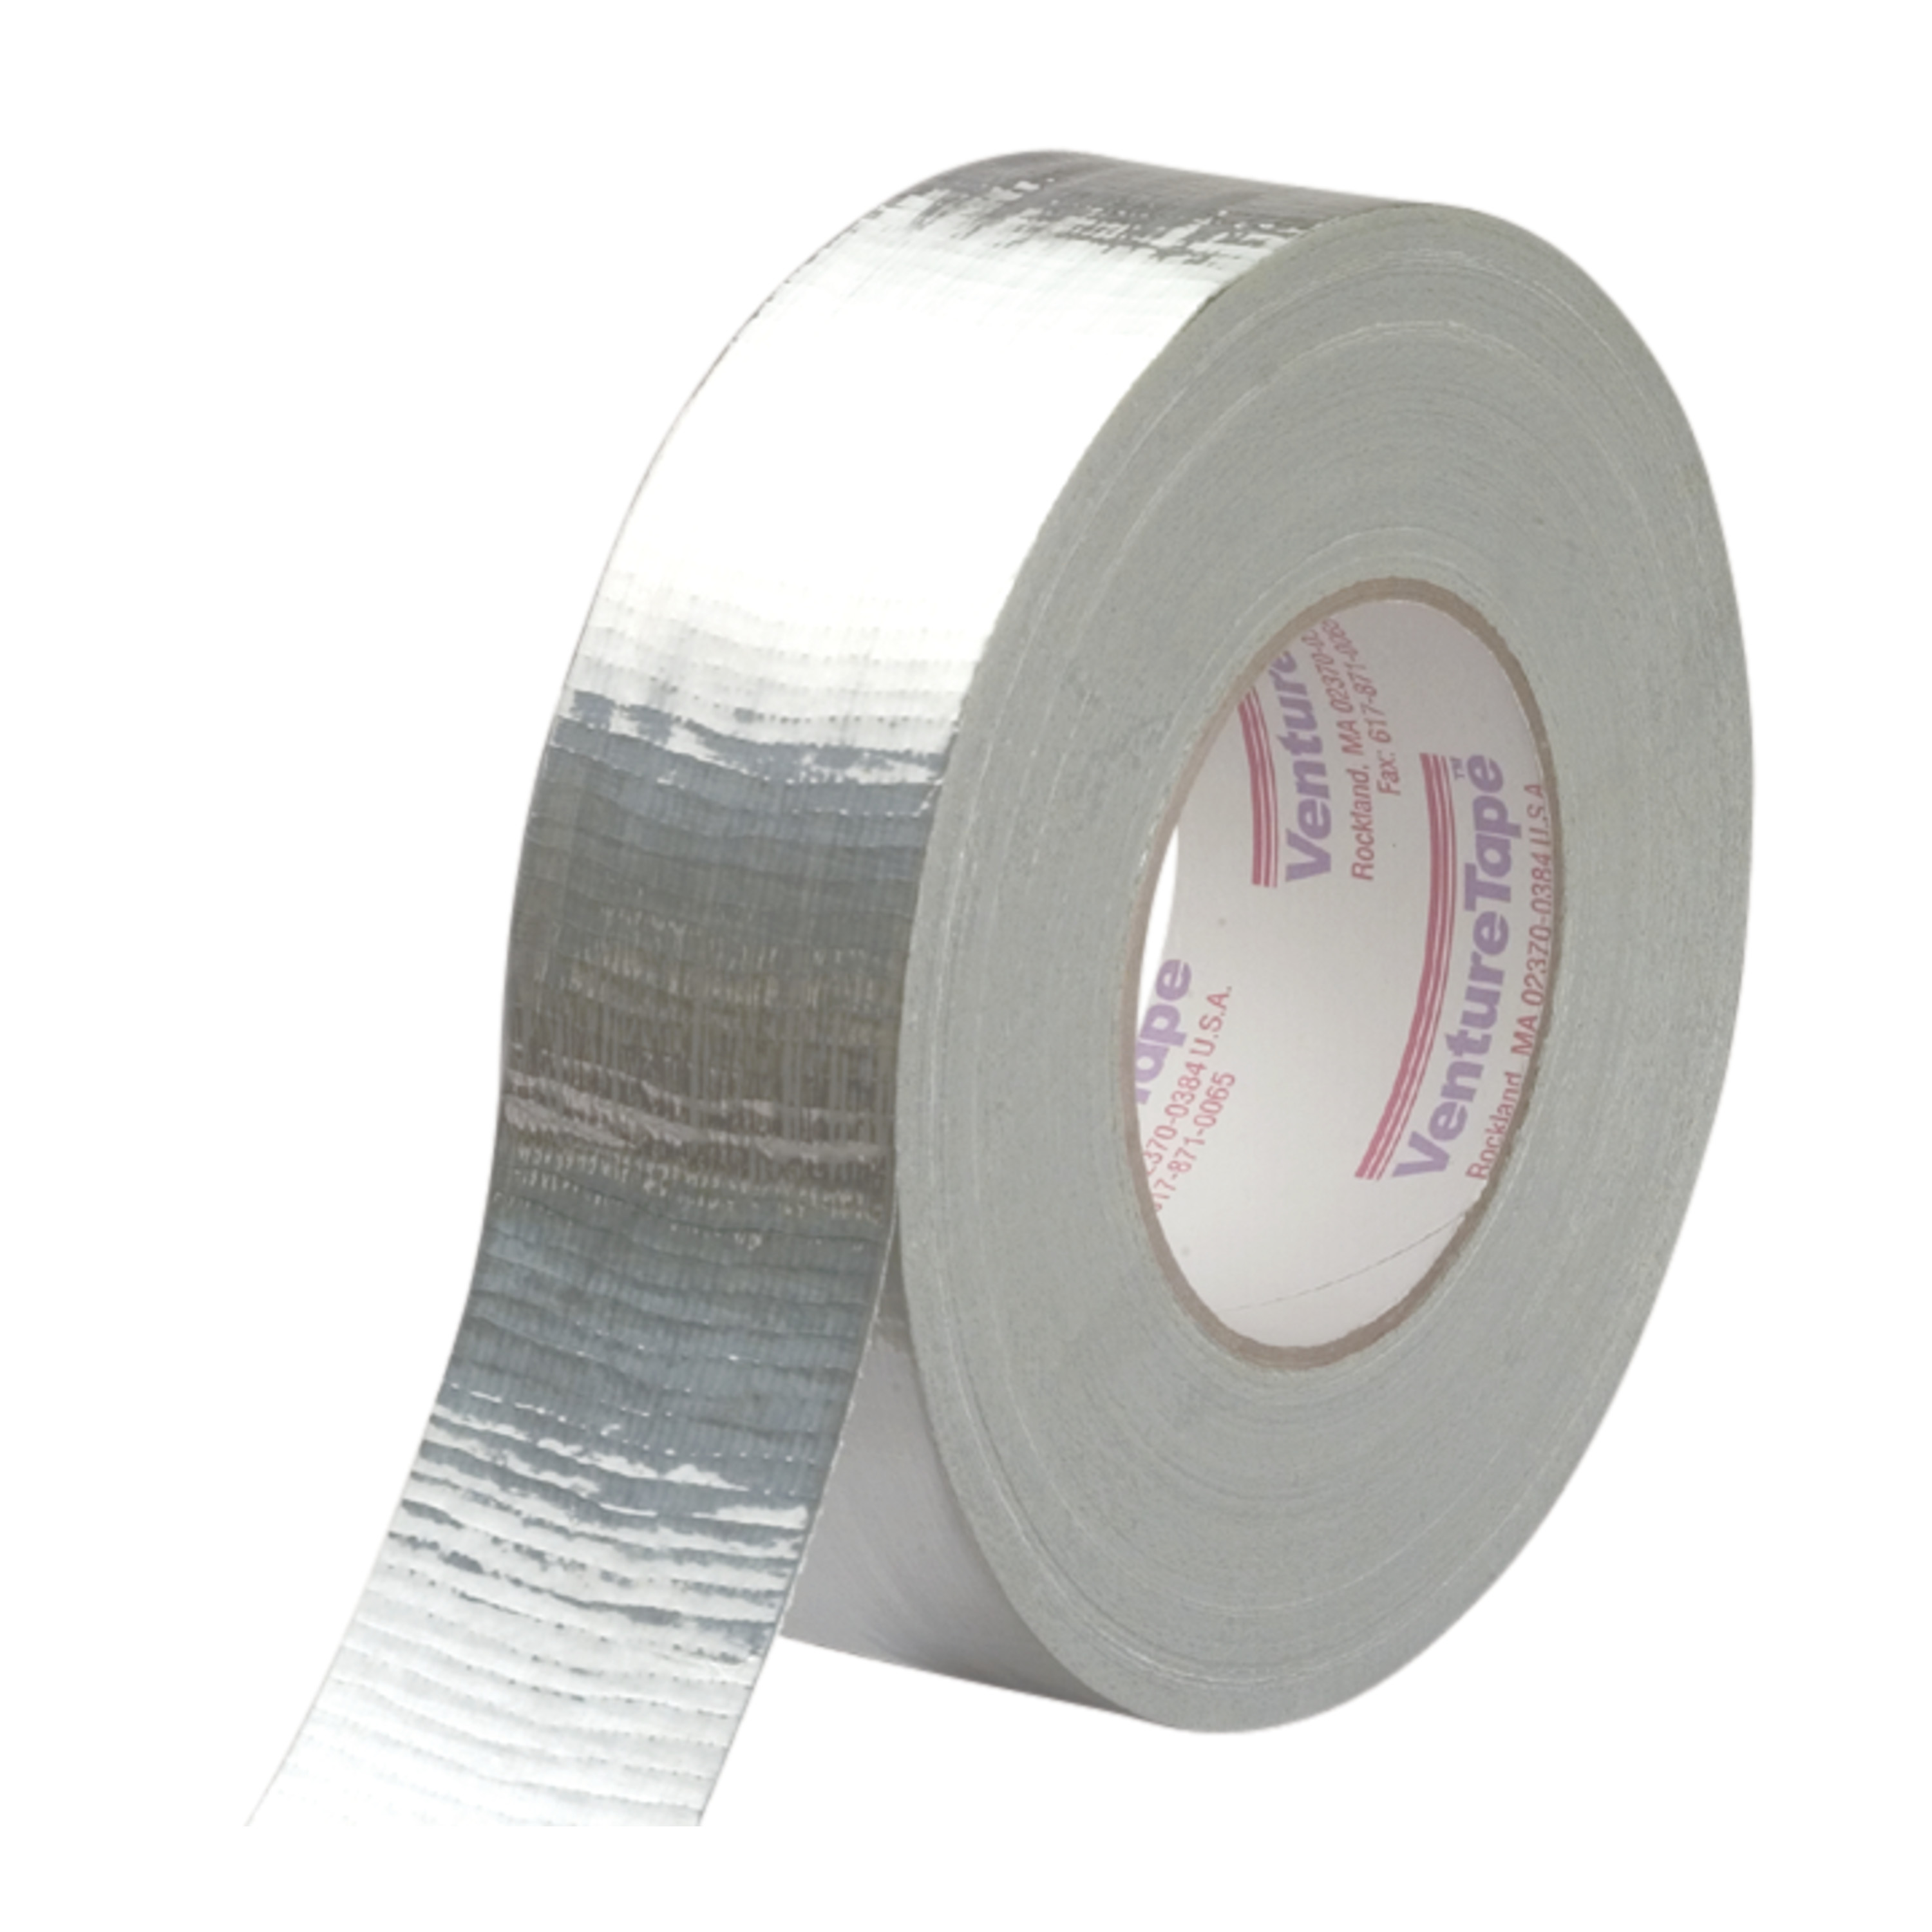 3M™ Venture Tape™ Metallized Cloth Duct Tape 1502, Silver, 72 mm x 55 m
(2.83 in x 60.1 yd), 16 per case